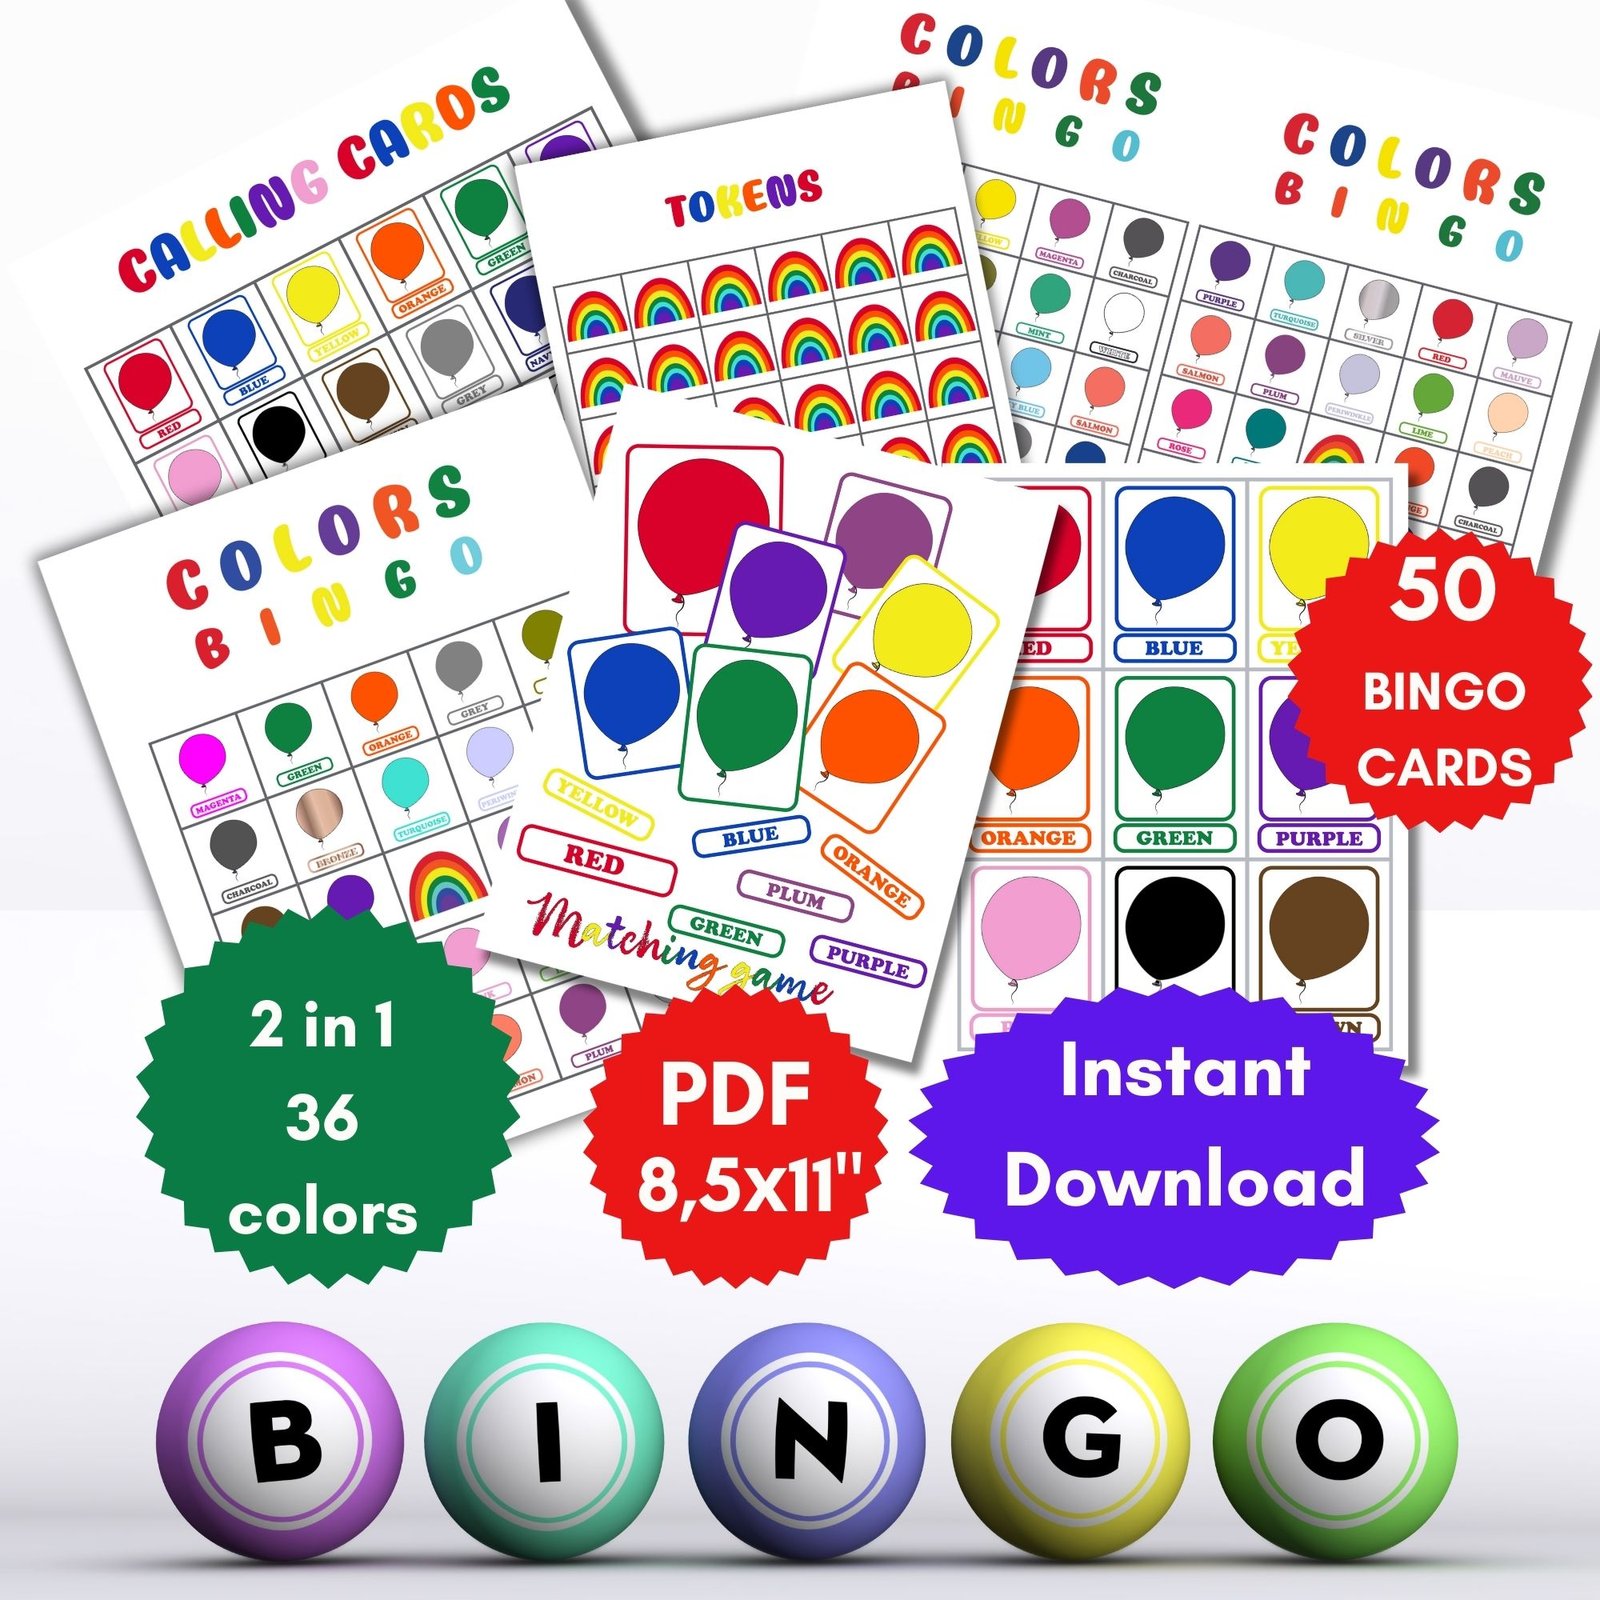 Colourful bingo game cards and tokens printable PDF.